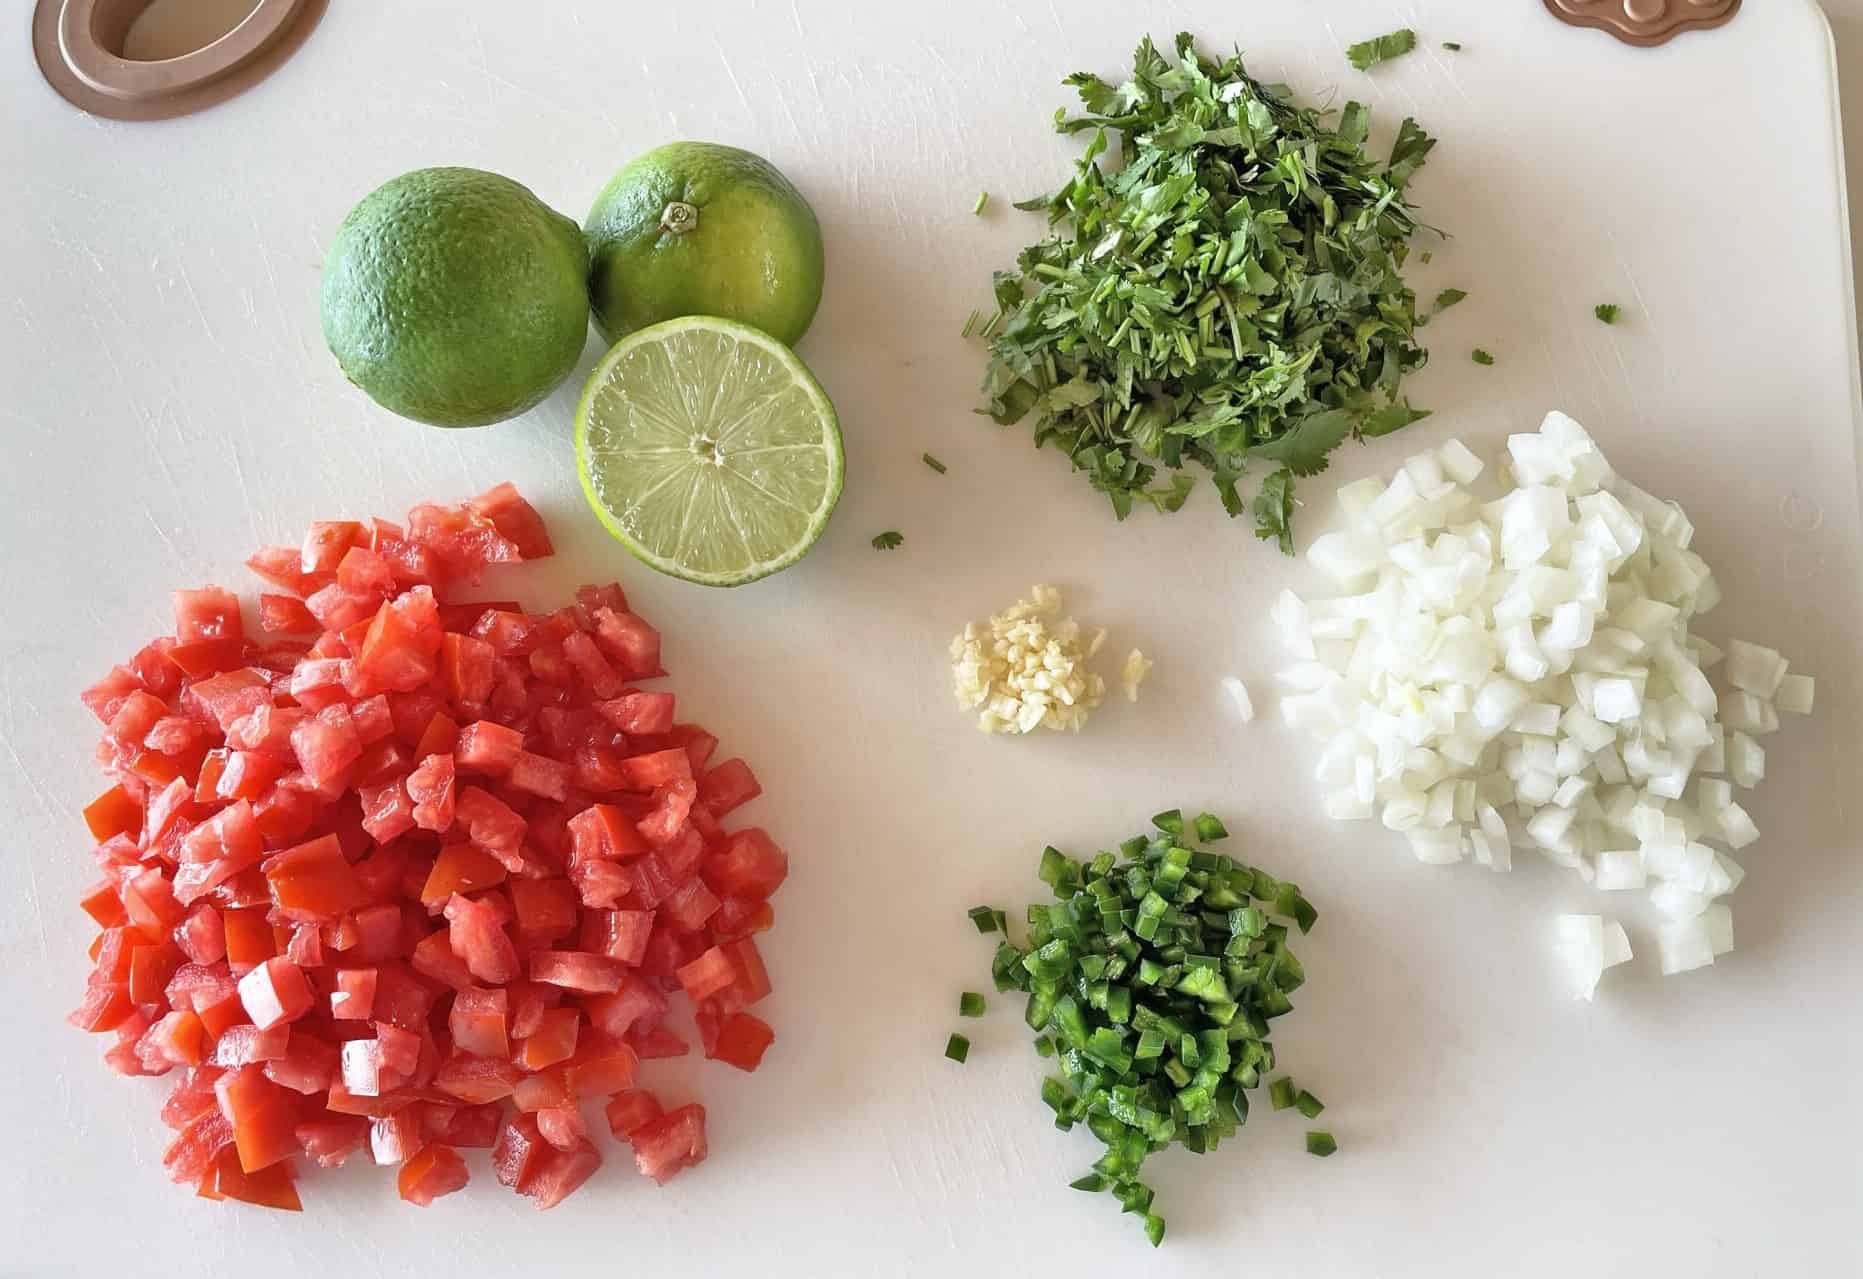 pico de gallo ingredients tomato lime cilantro garlic jalapeno and onion